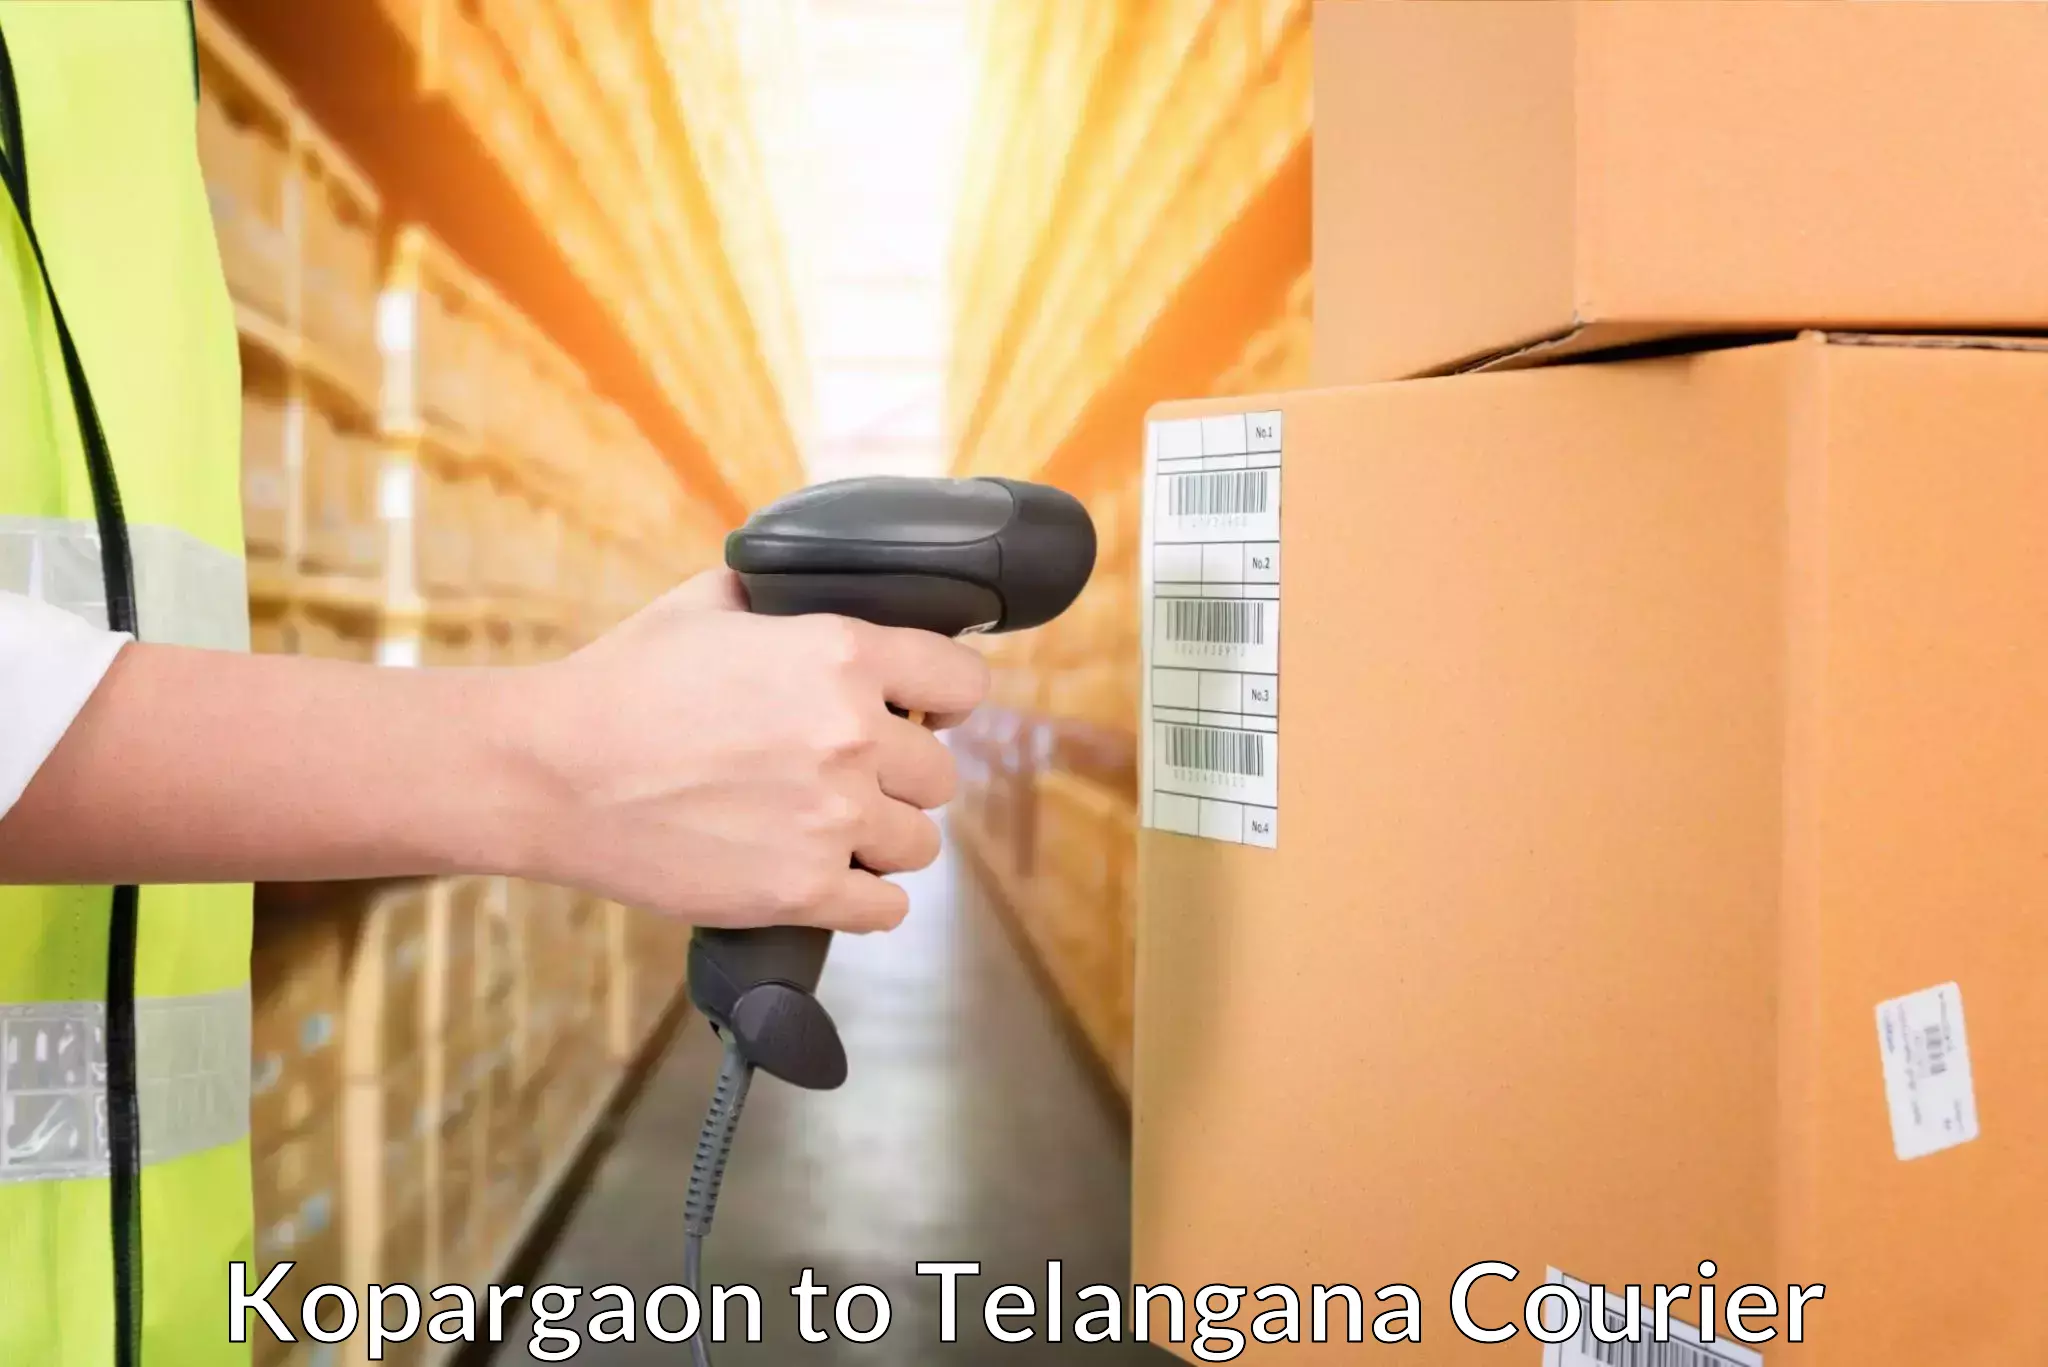 Courier service innovation Kopargaon to Eligedu